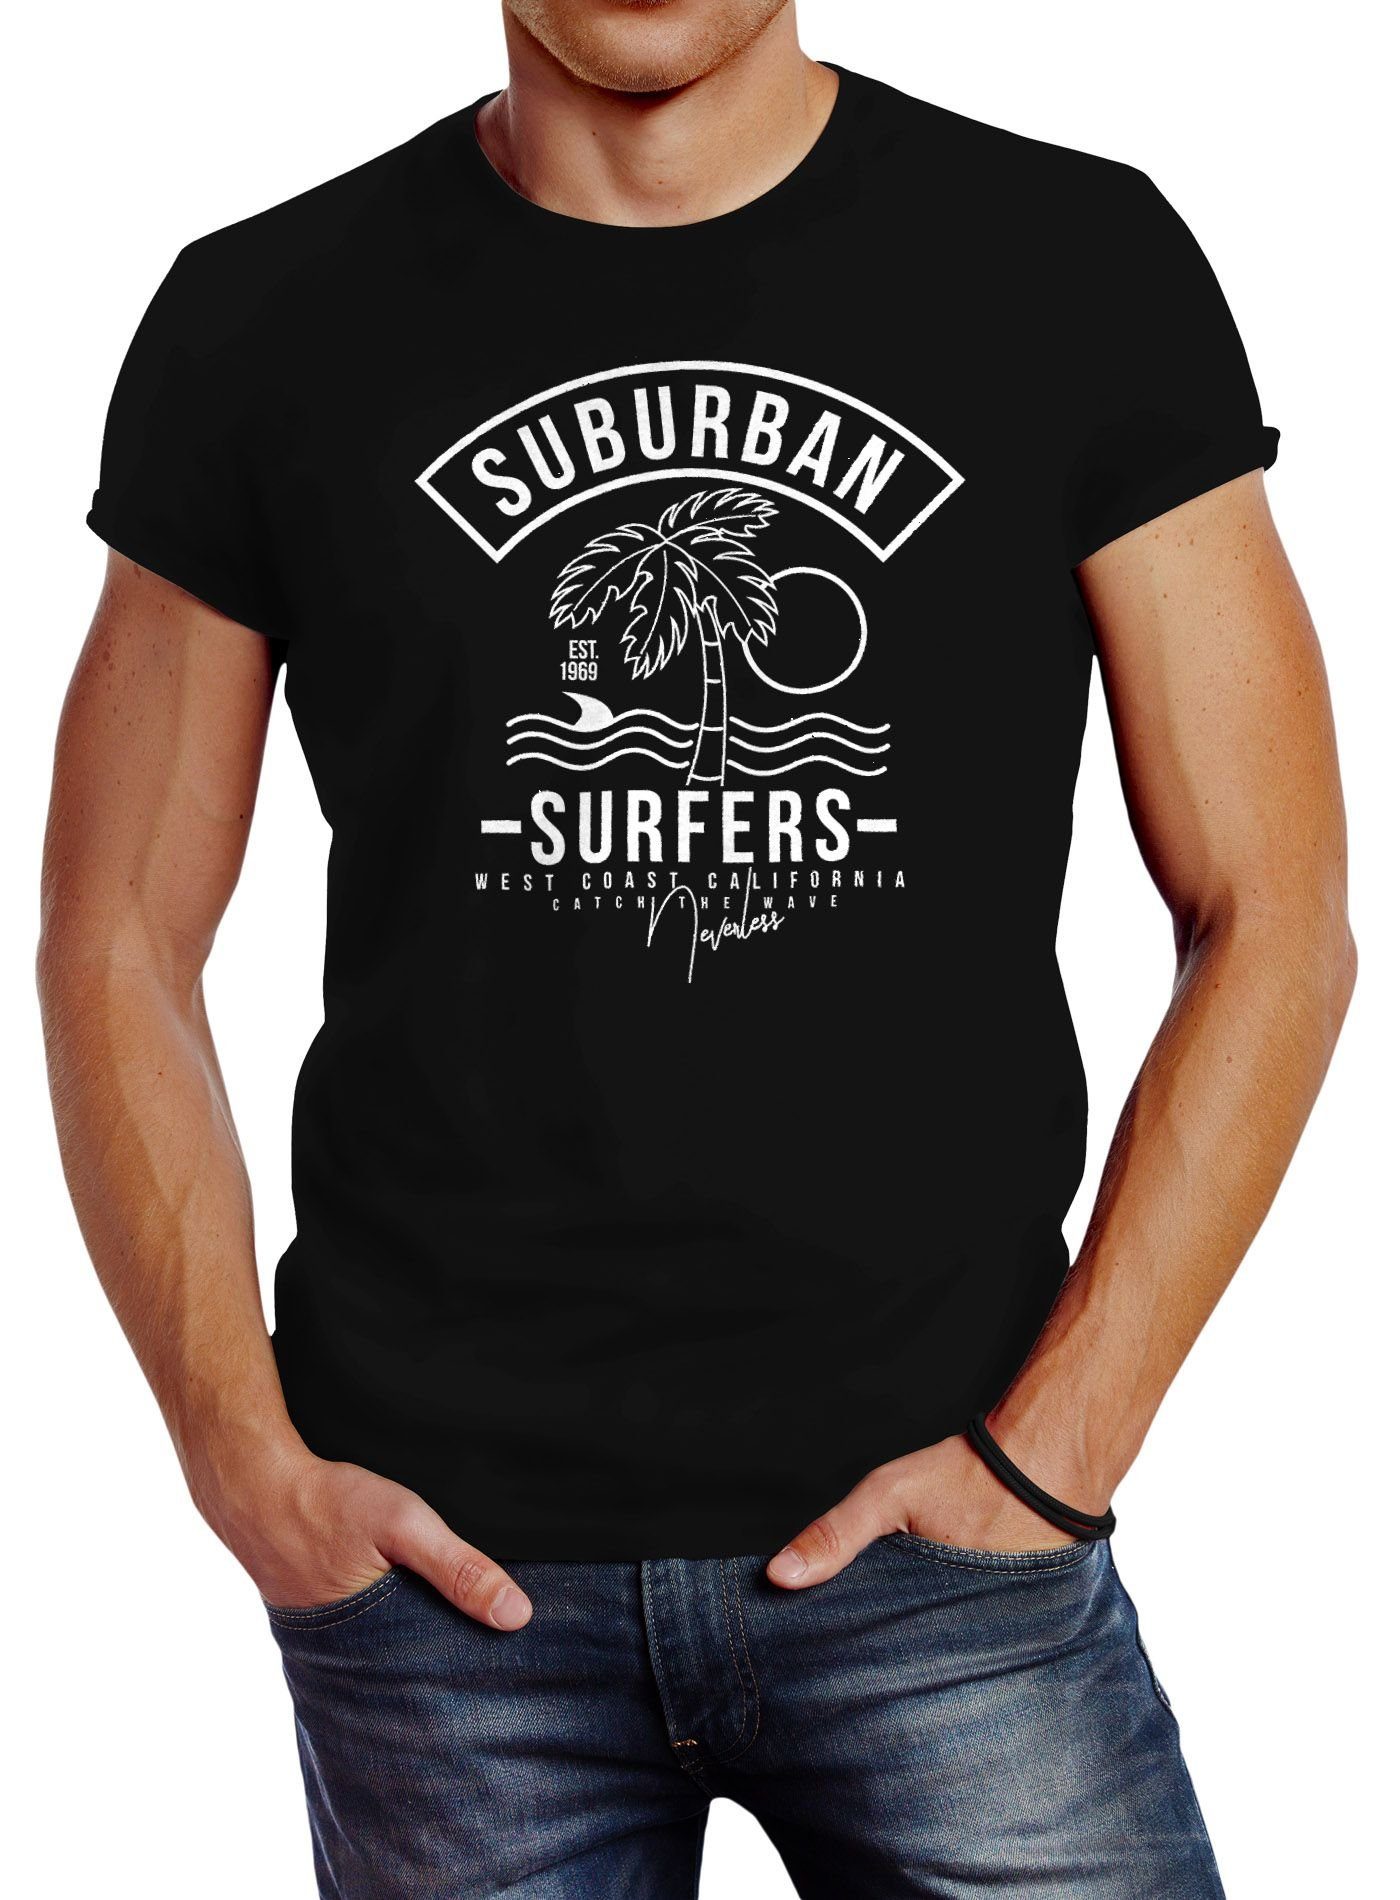 Neverless Print-Shirt Herren T-Shirt Suburban Surfers West Coast California Urlaub Meer Wellenreiten Slim Fit Neverless® mit Print